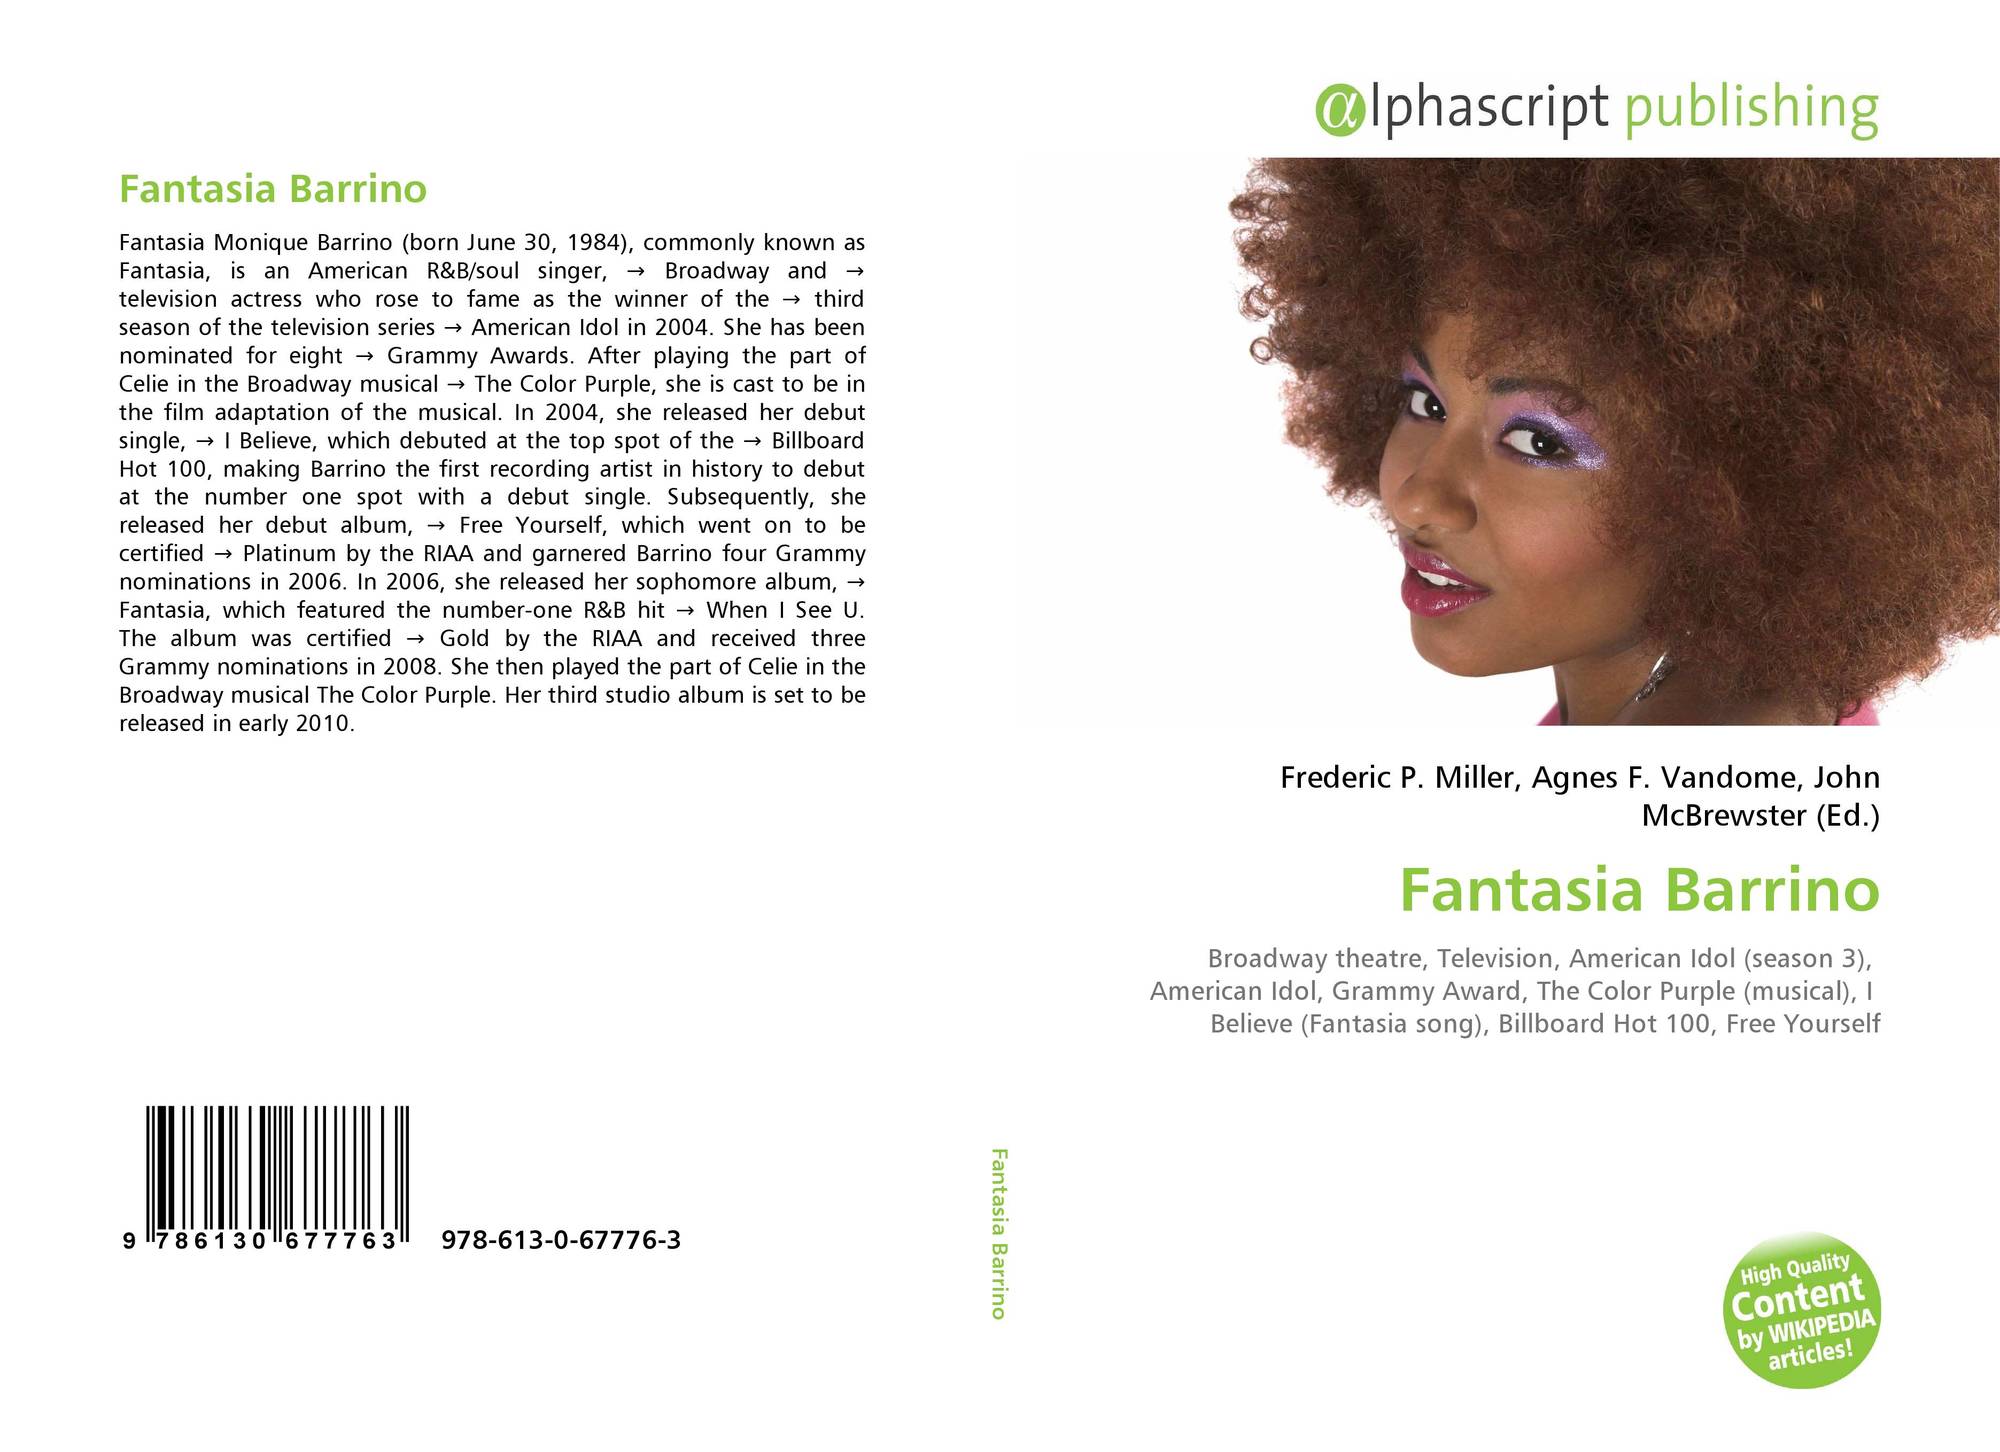 fantasia barrino free yourself album